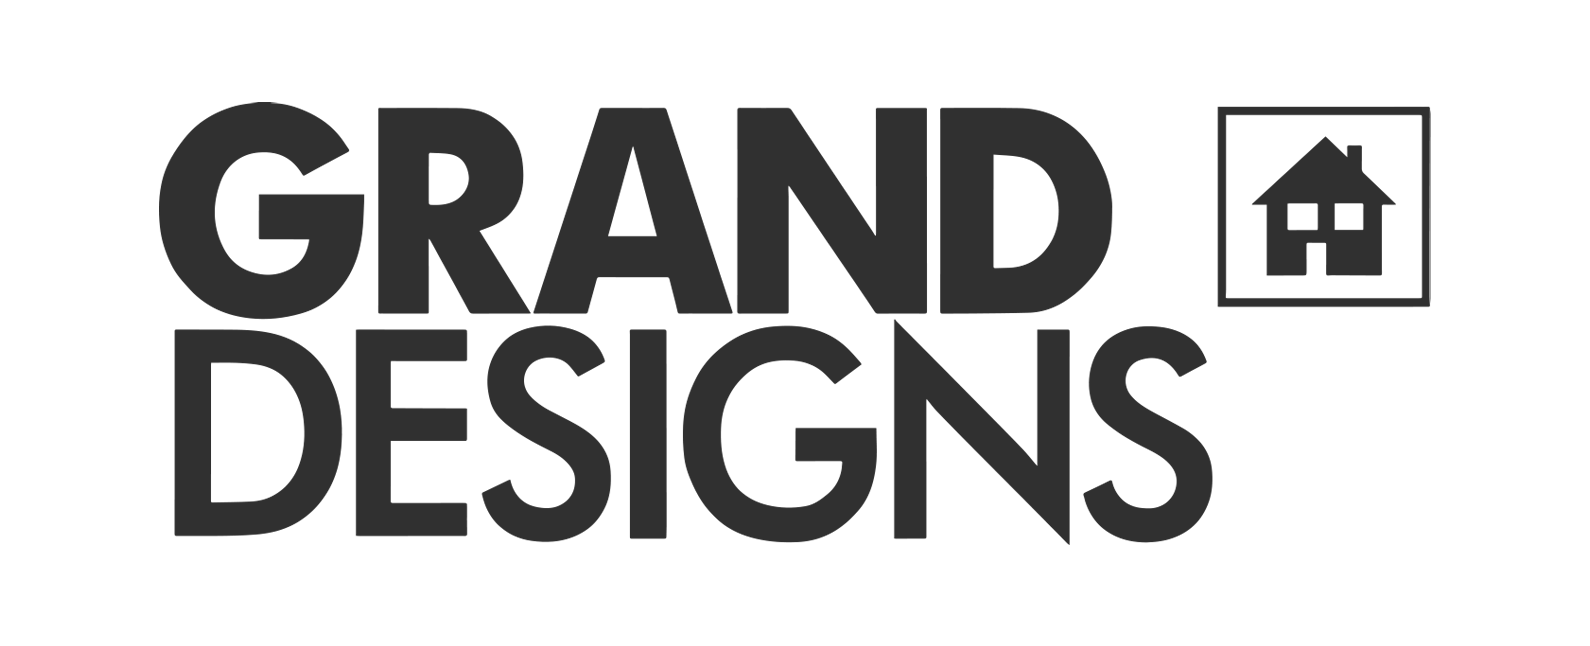 Grand-designs-logo-RVB